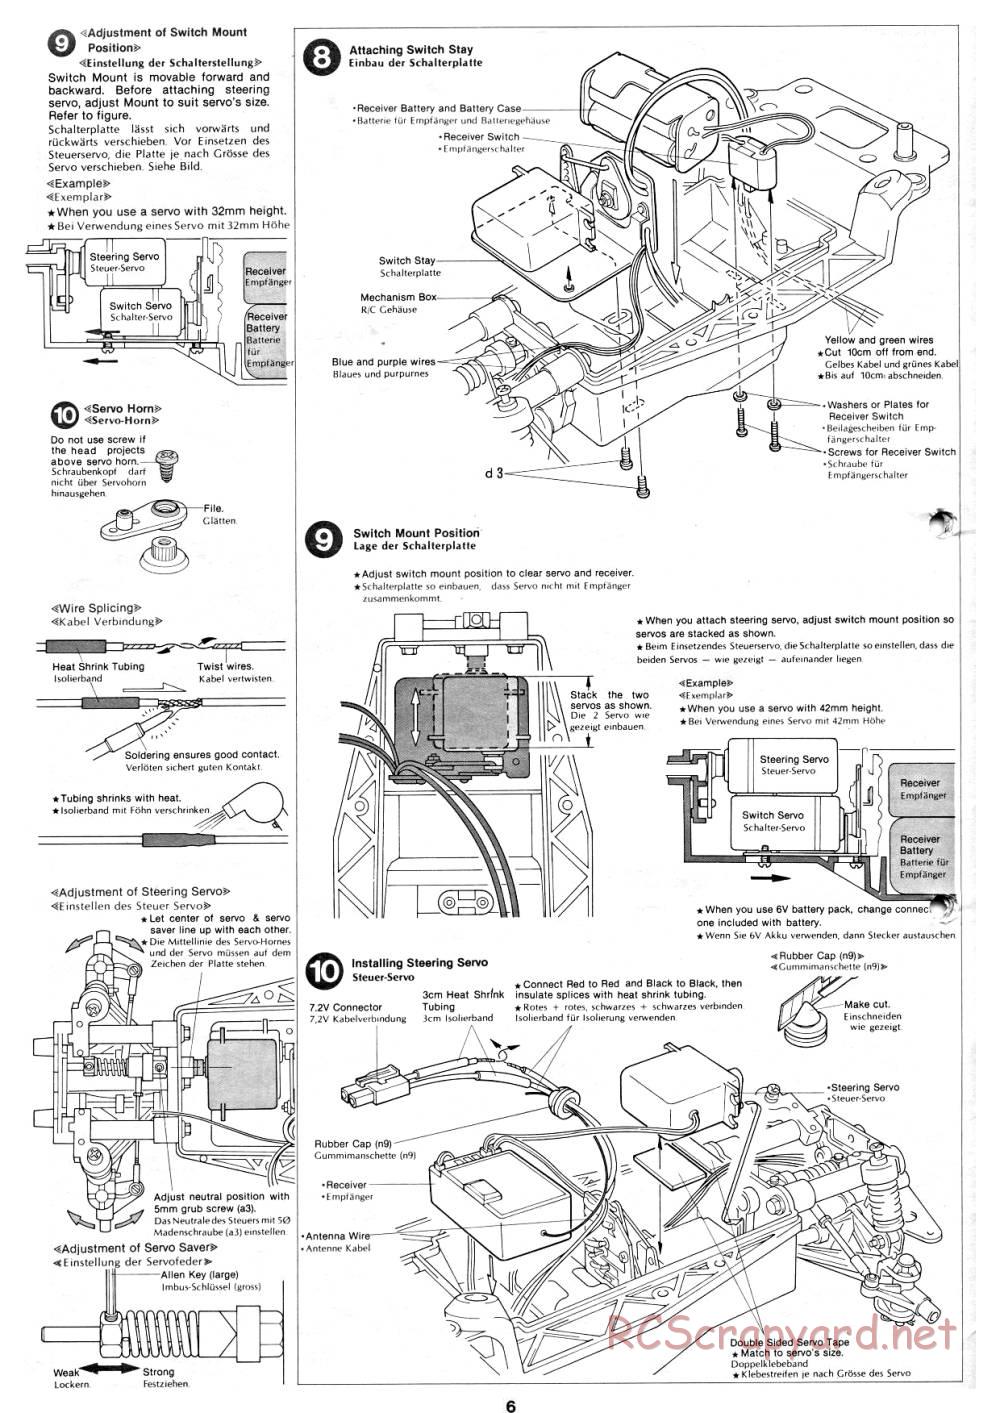 Tamiya - Opel Ascona 400 Rally - 58037 - Manual - Page 6